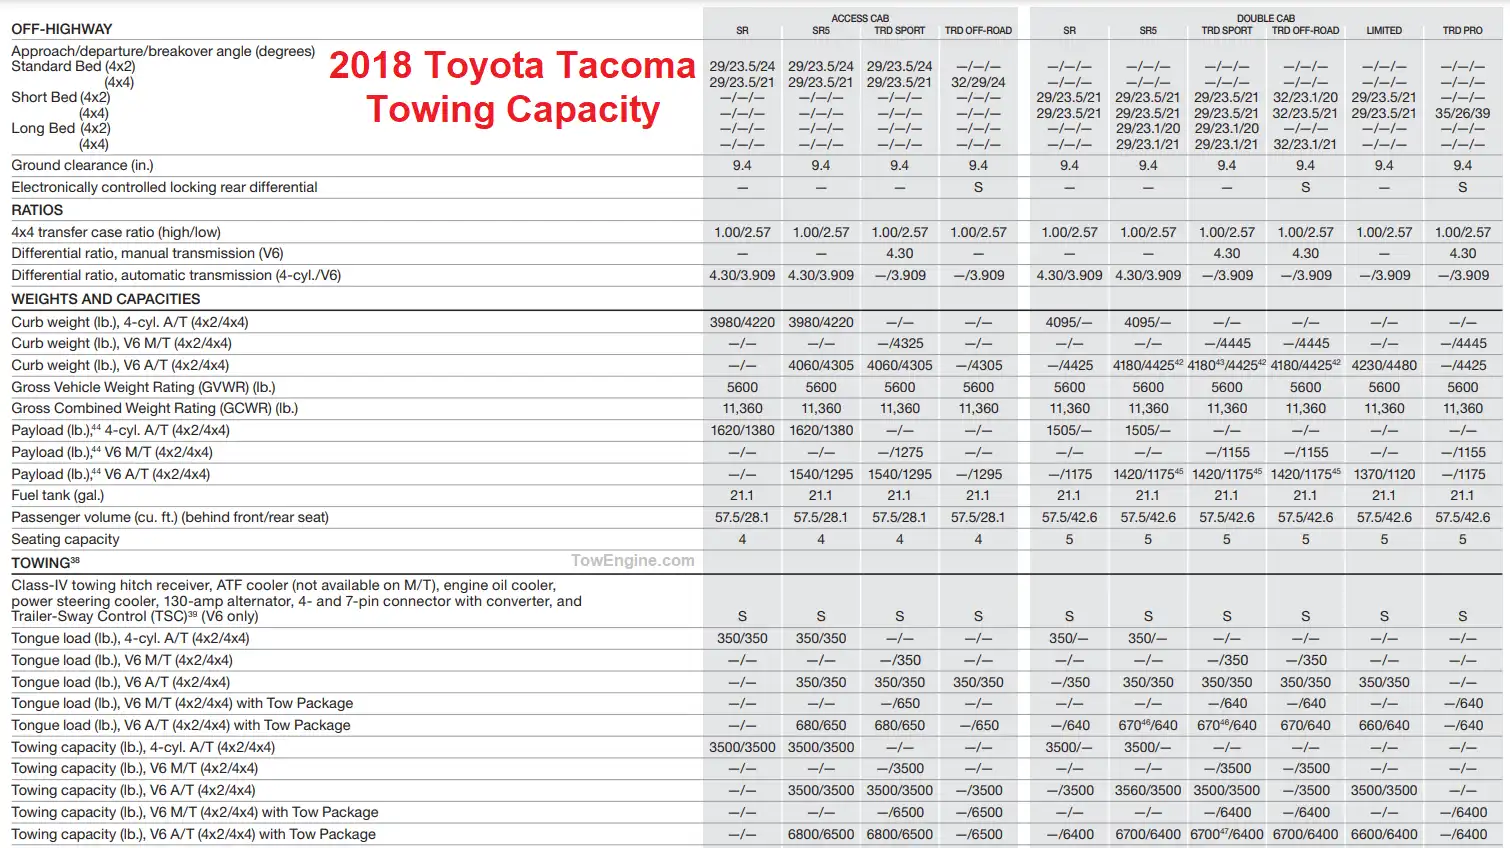 2018 Toyota Tacoma Towing Capacity & Payload Capacity Chart